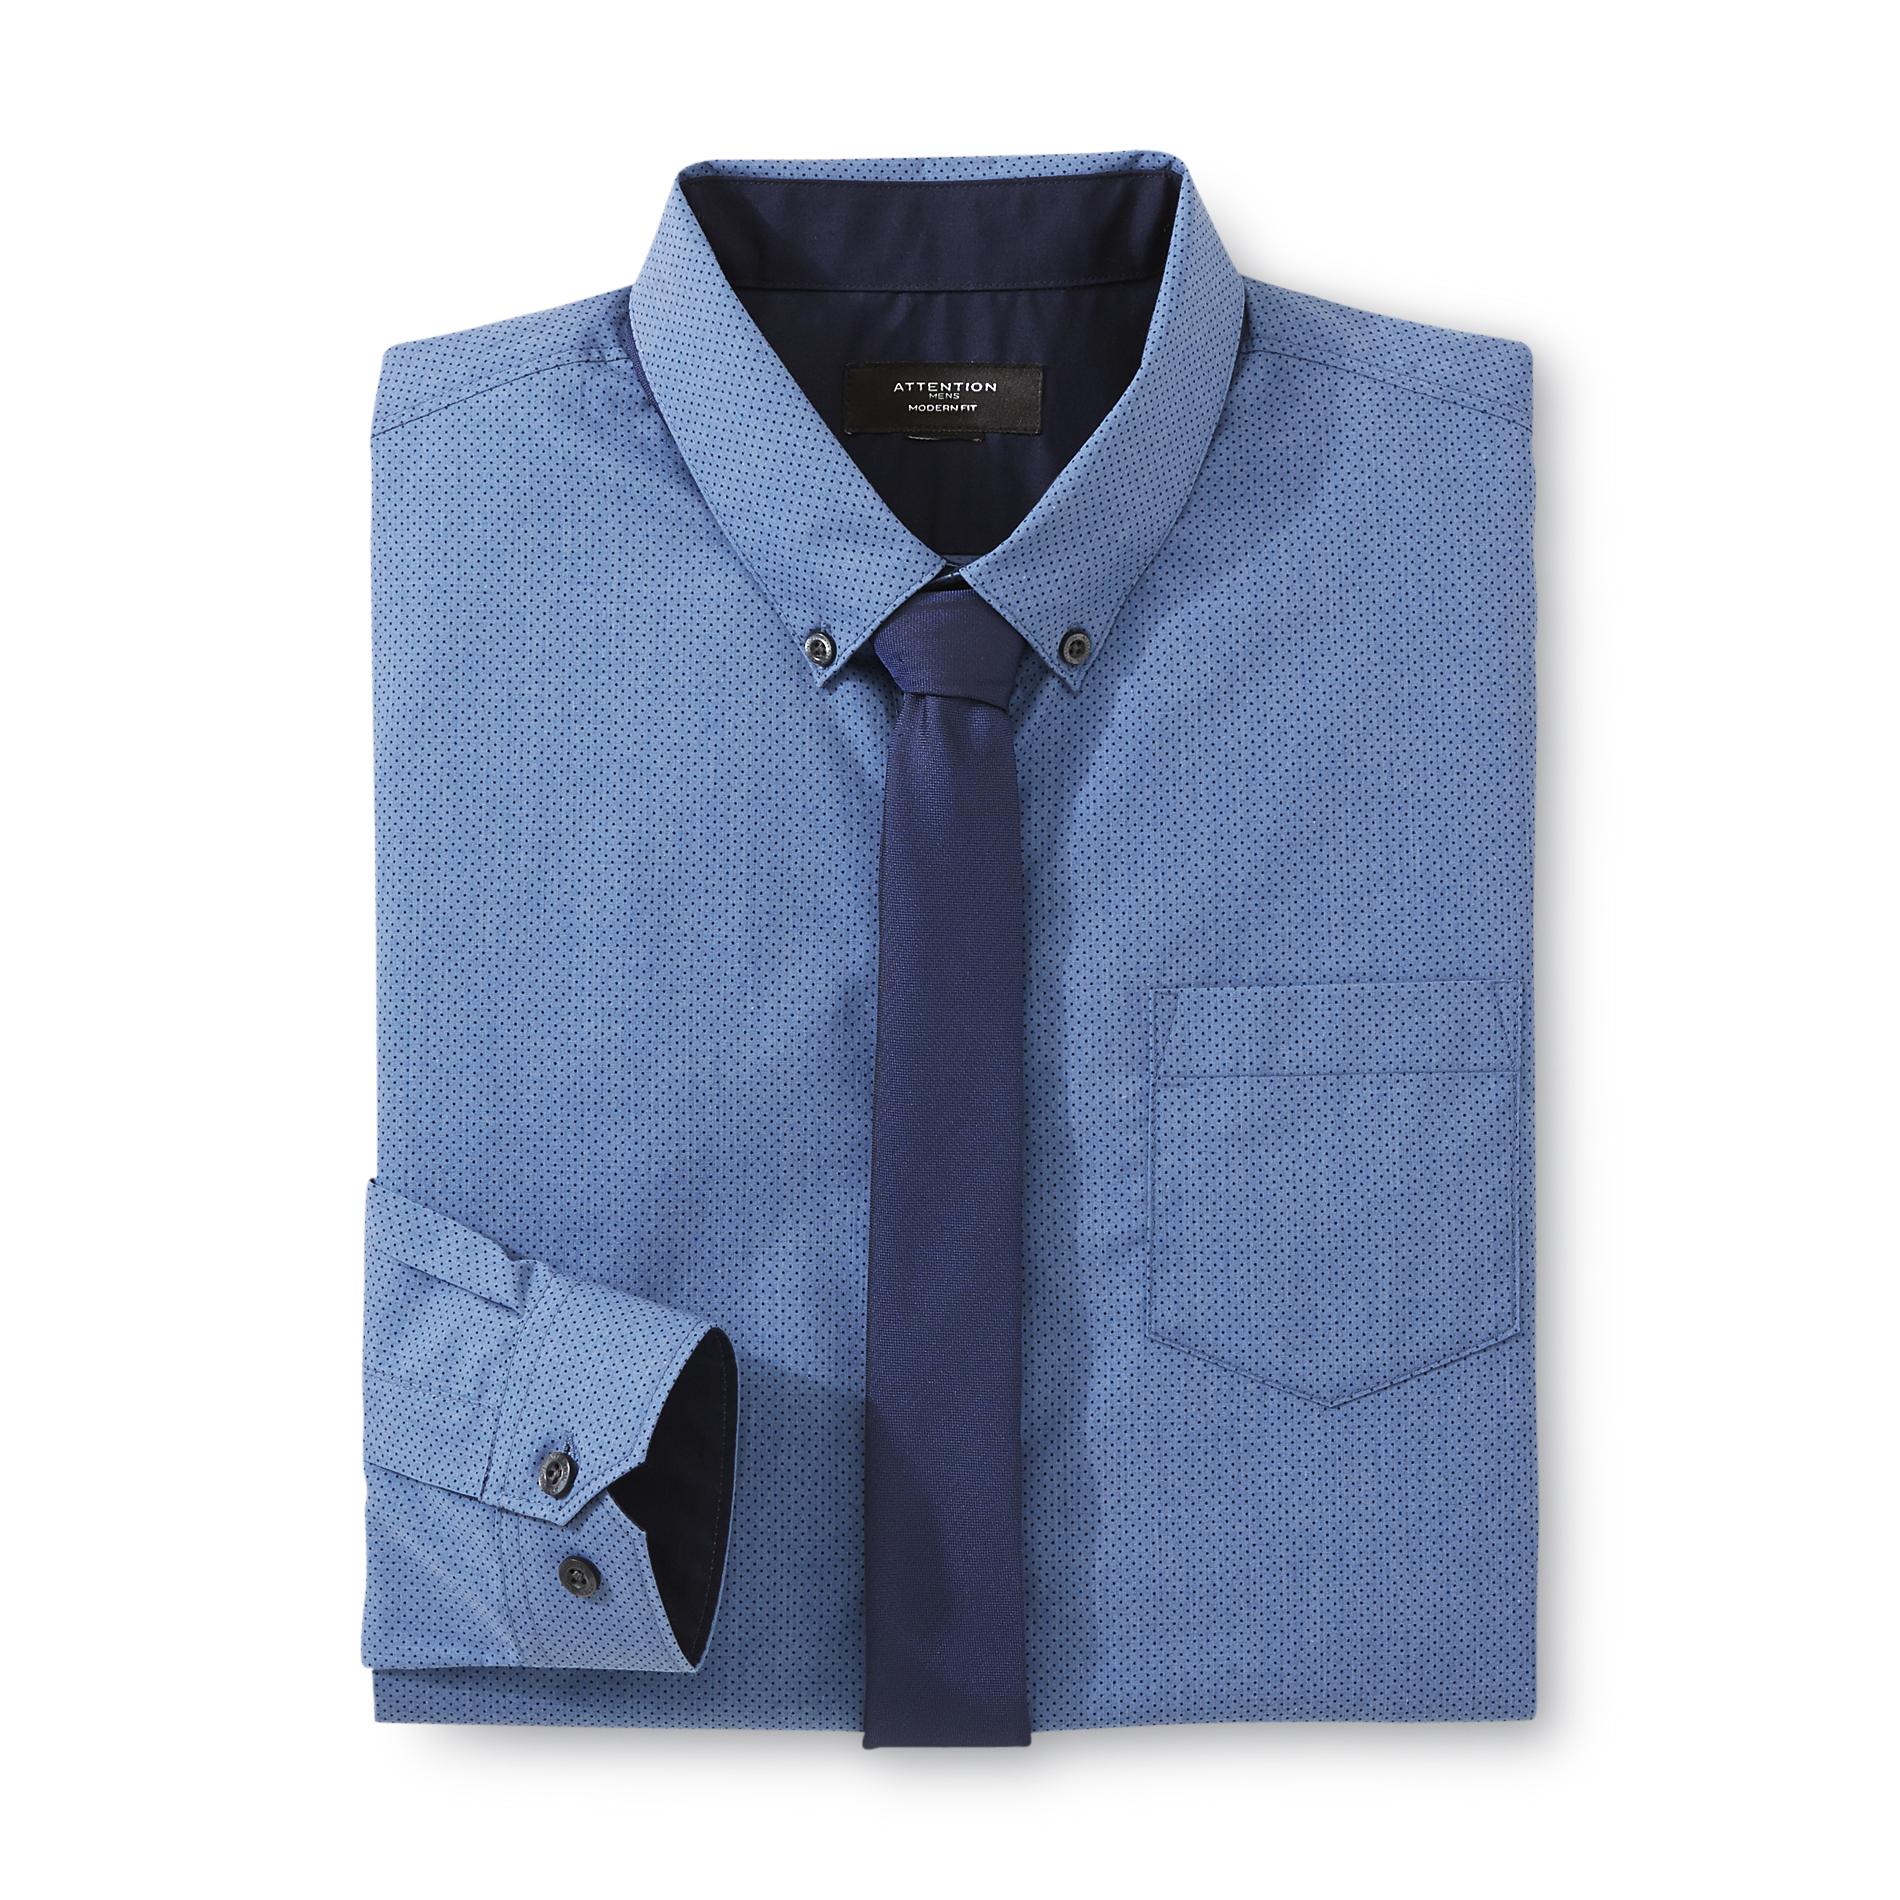 Attention Men's Dress Shirt & Necktie - Dots